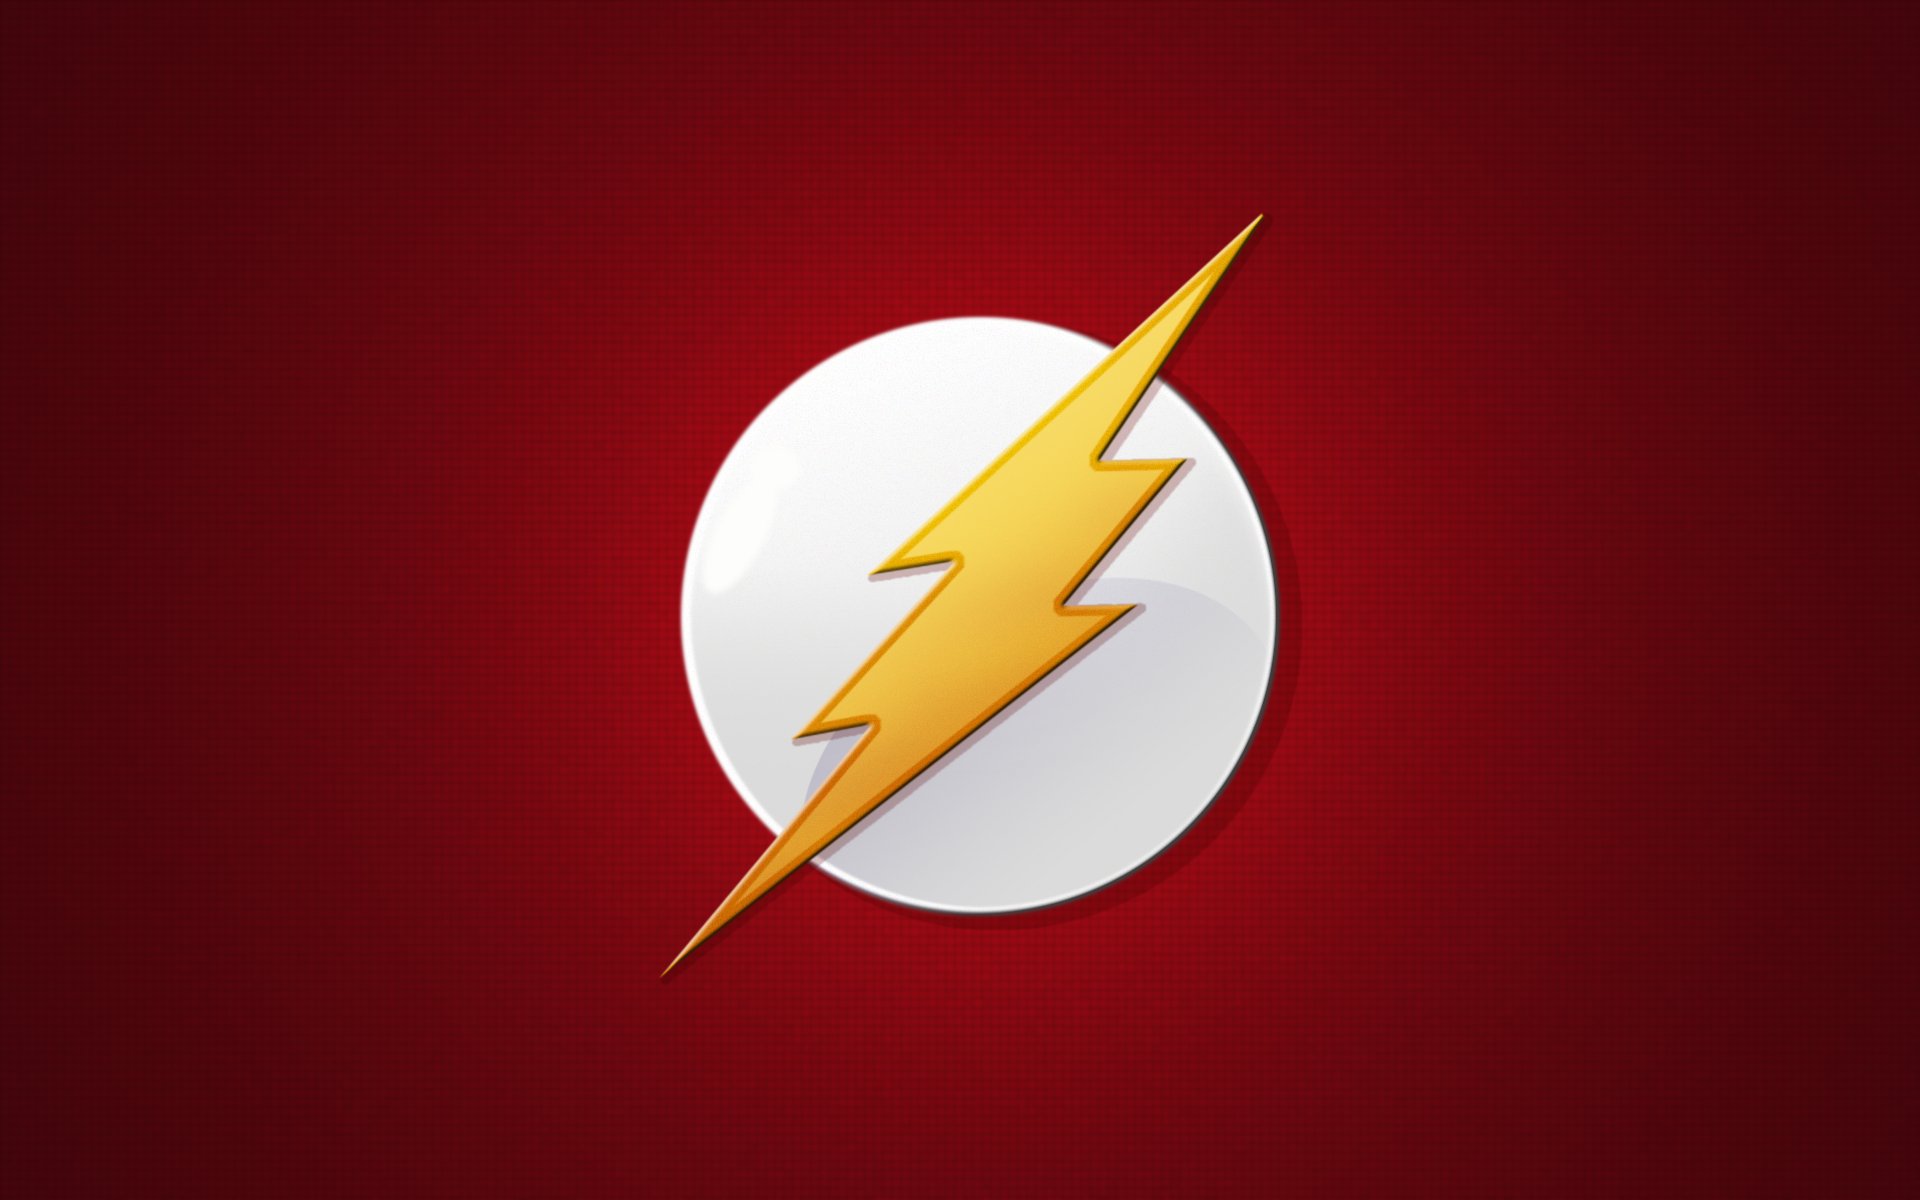 The Flash would be a GOD coalescecreative